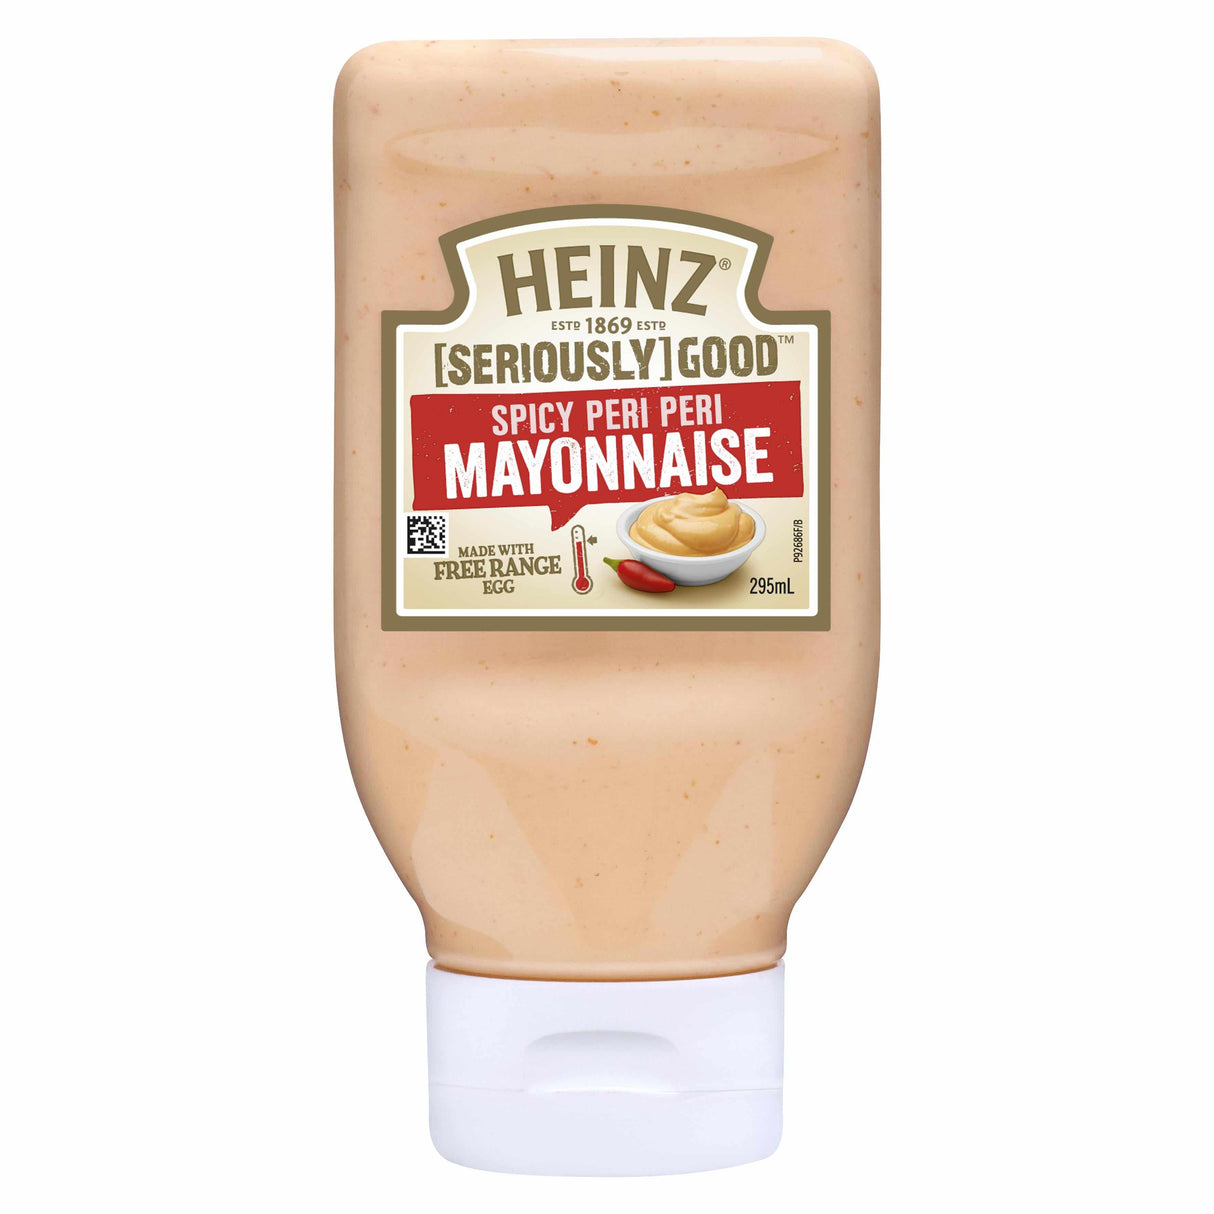 Heinz [SERIOUSLY] GOOD Spicy Peri Peri Mayonnaise 295ml